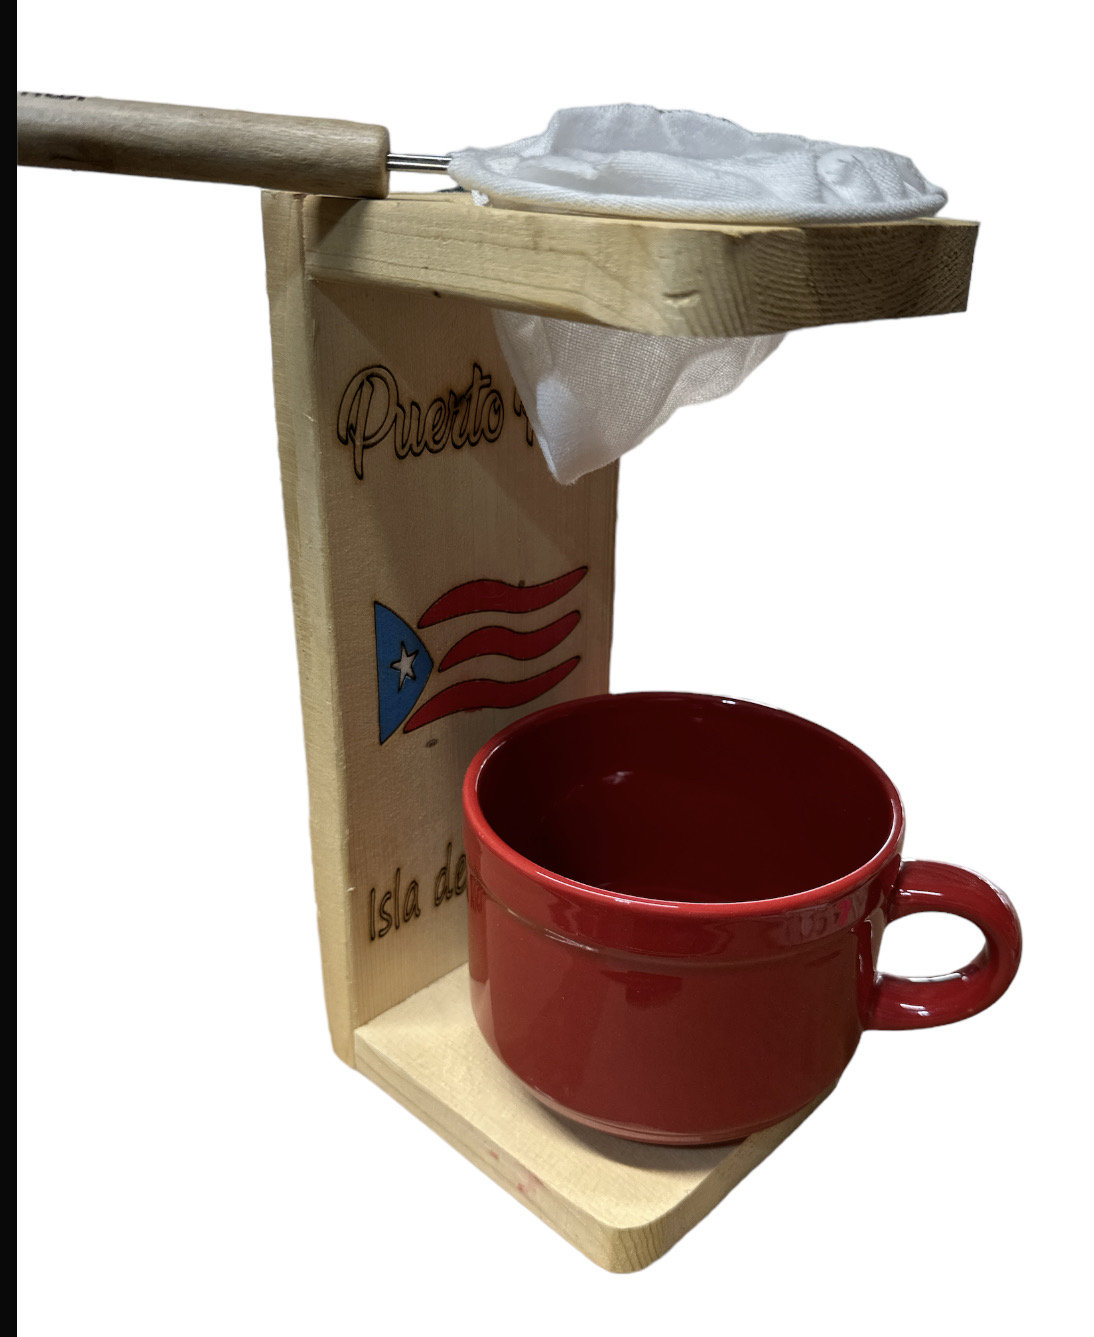 El Pantry Limited Edition Puerto Rican Artists Coffee Maker Bundle